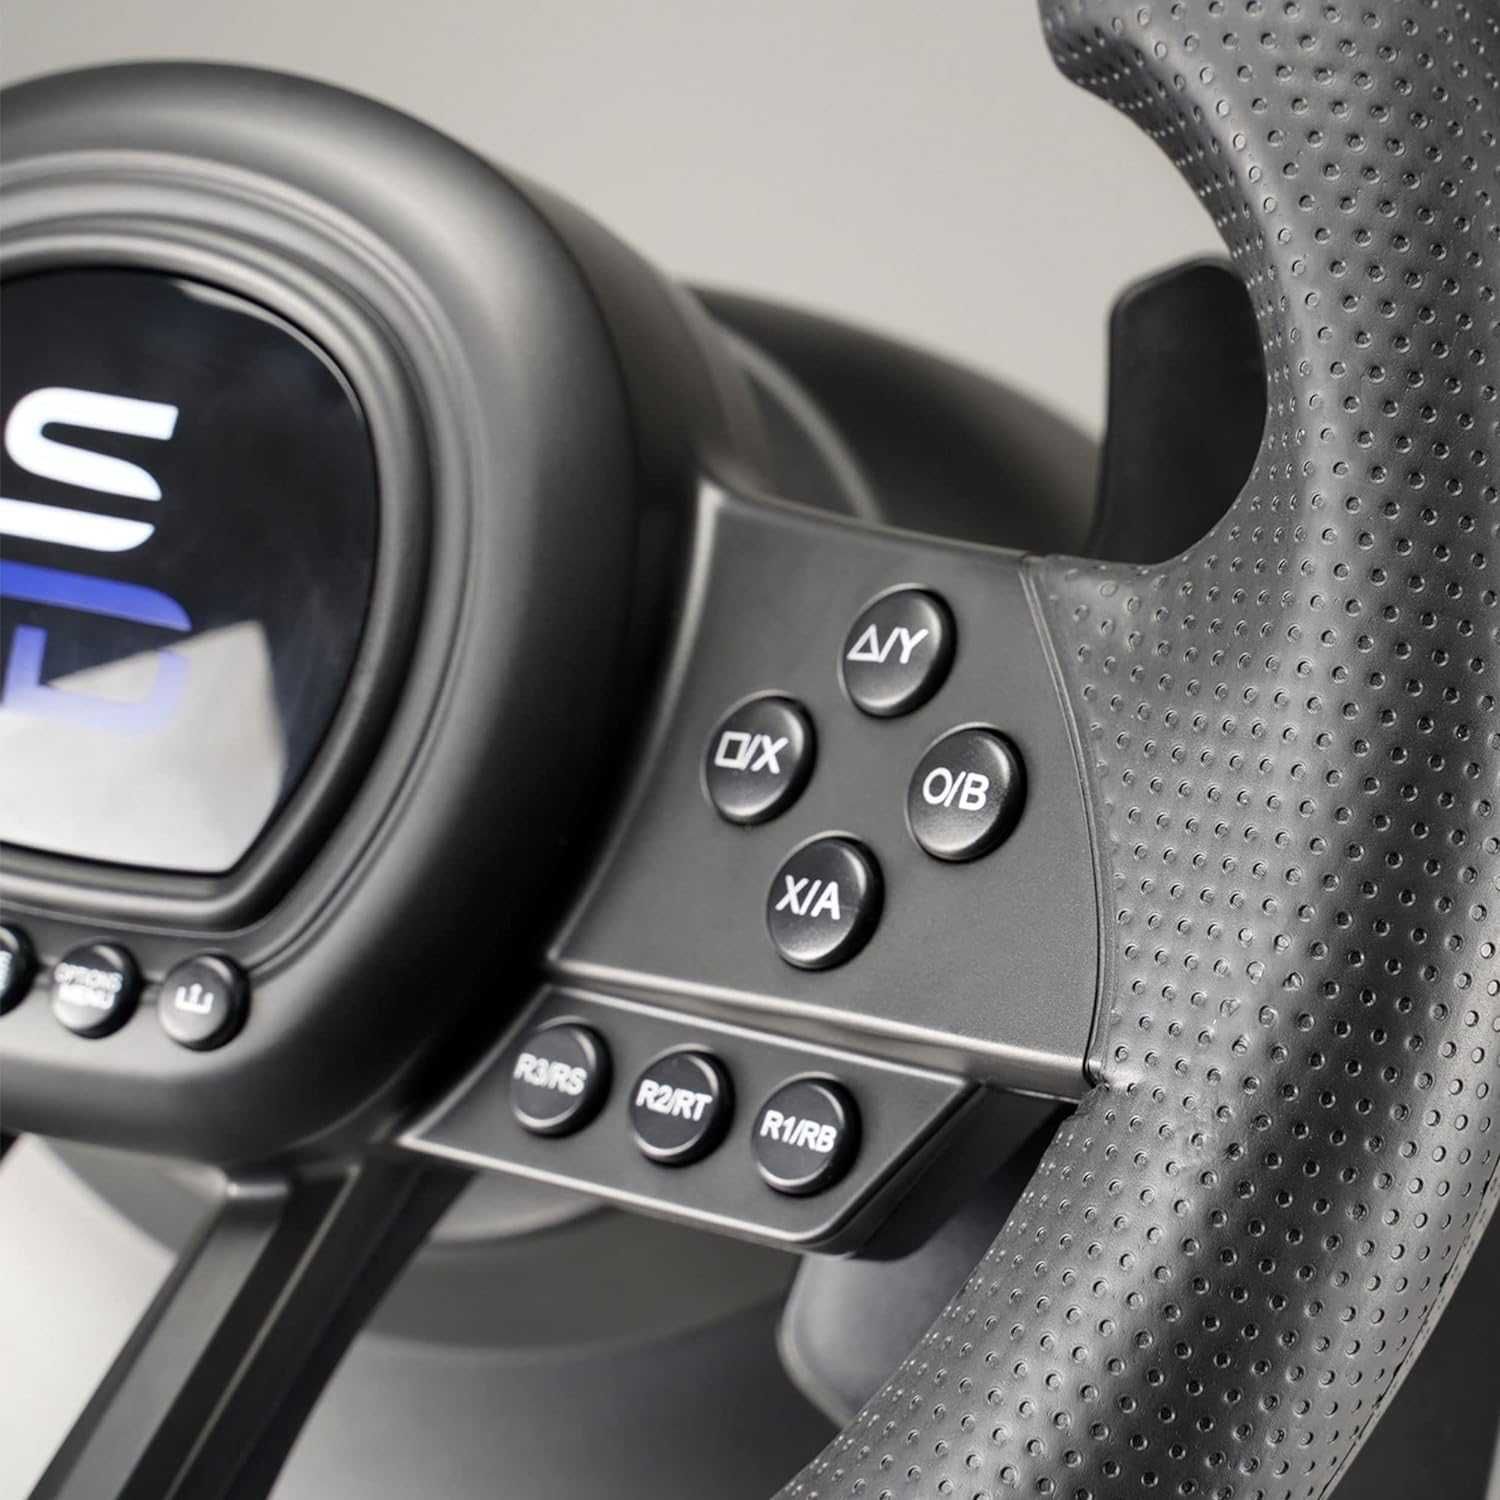 Волан Subsonic SuperDrive Racing Wheel SV650 за PS4/PS3/PC/XBOX/SWITCH